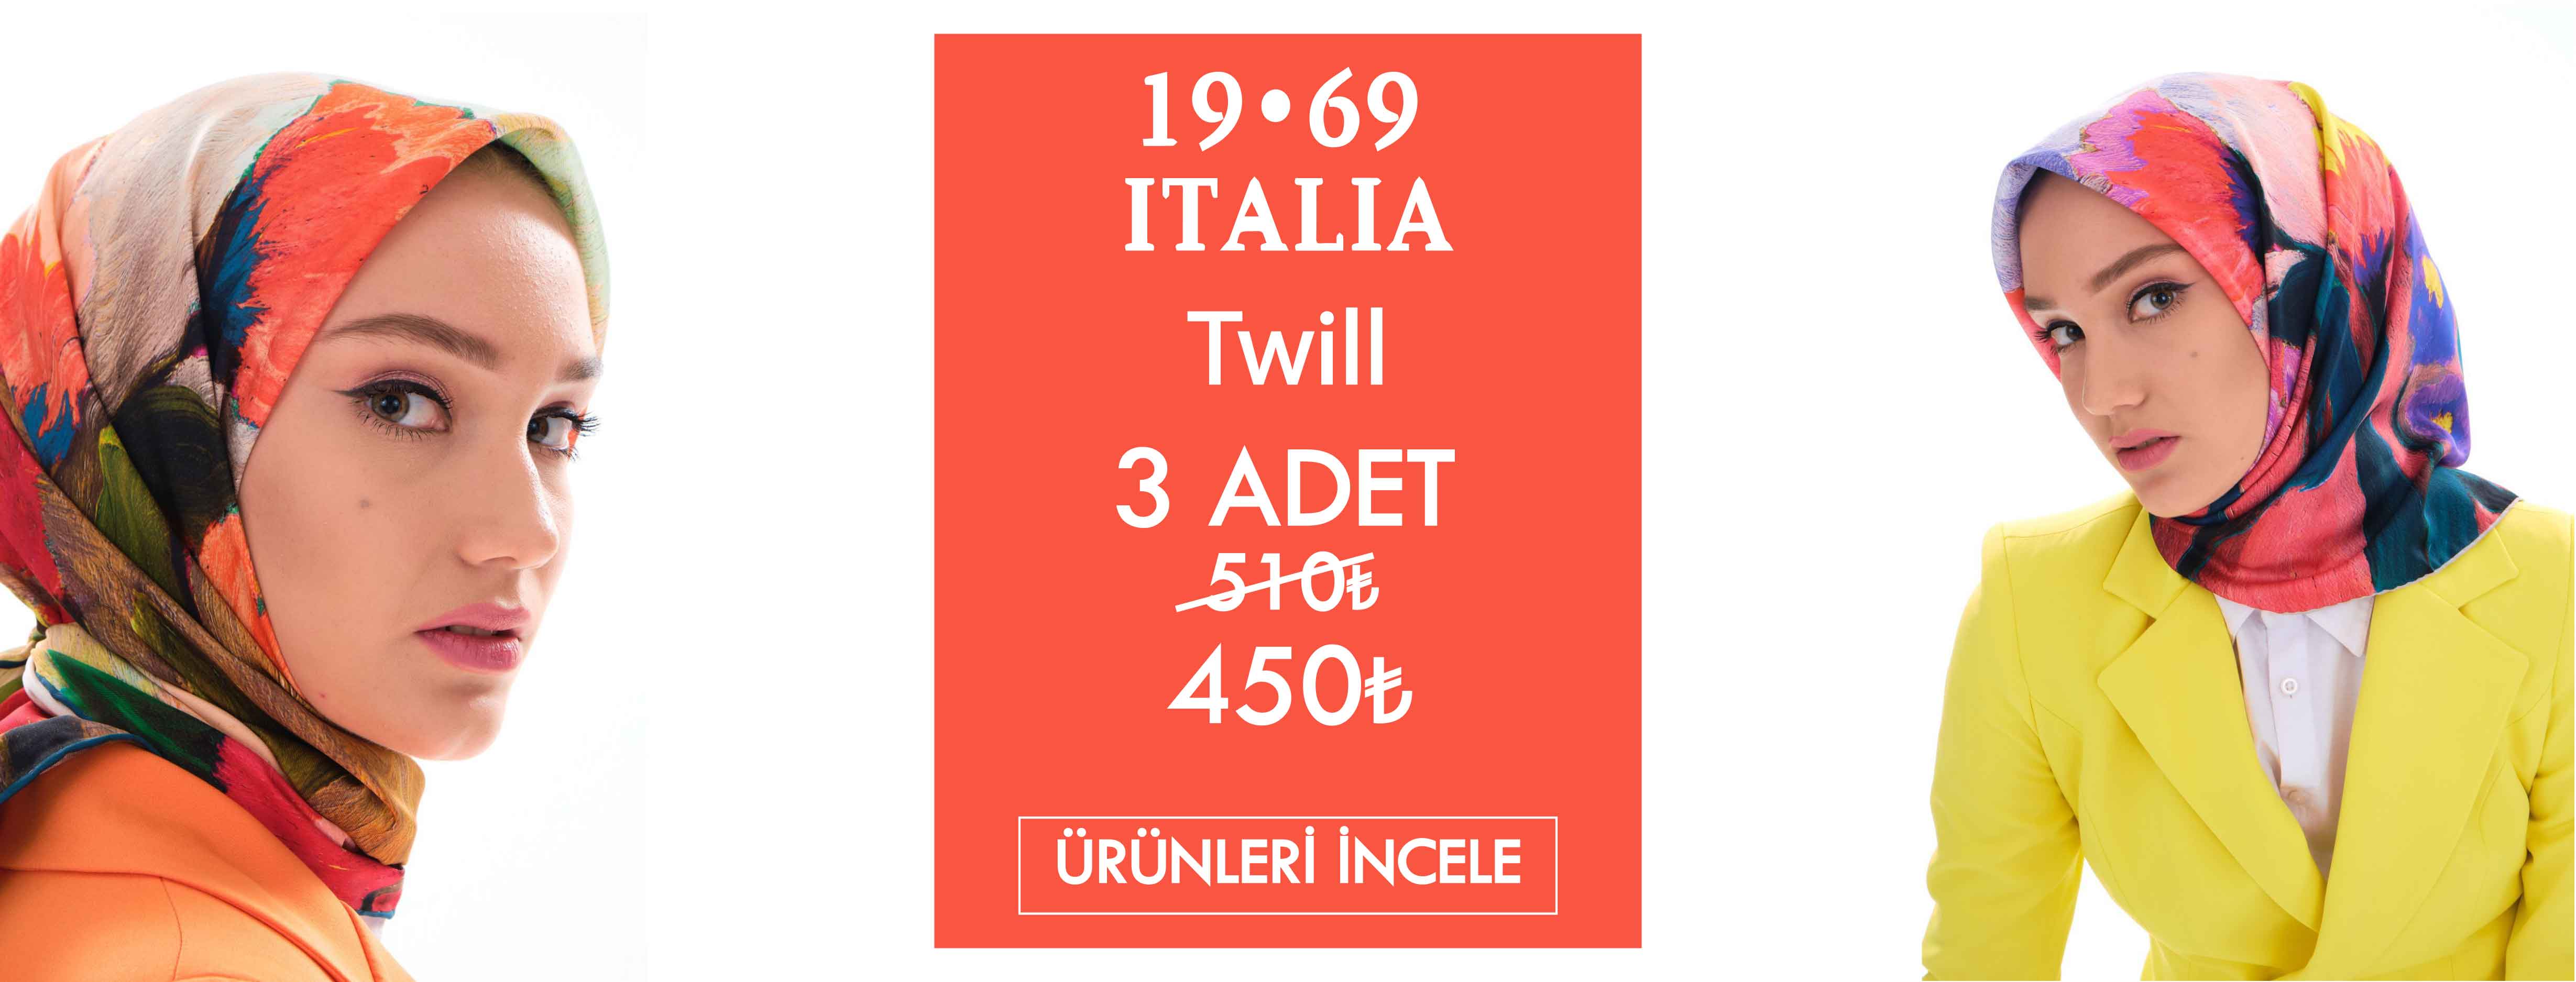 19V69 ITALIA Twill Eşarp